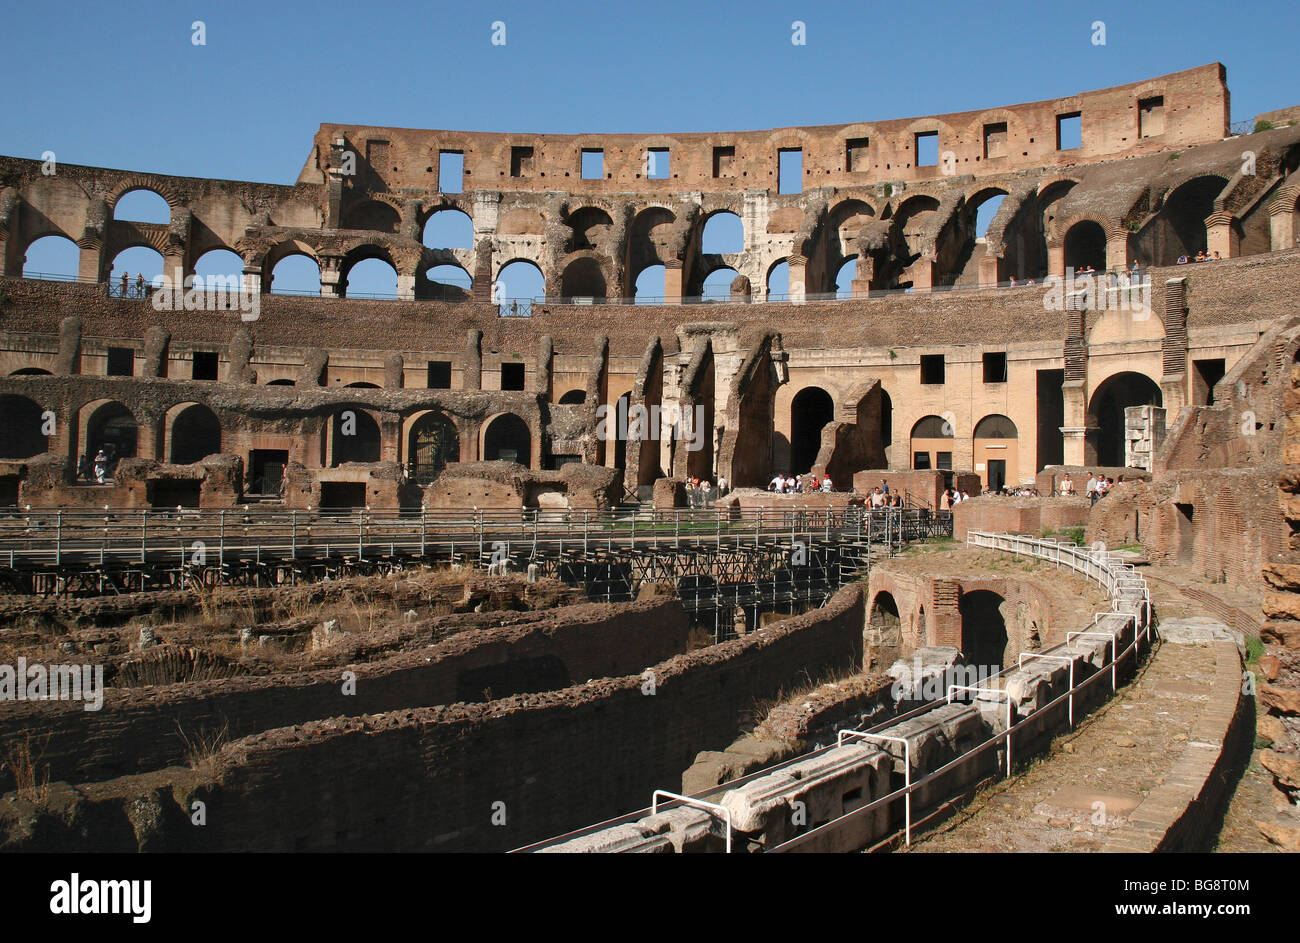 The Colosseum (Coliseum) or Flavian Amphitheatre. Rome. Stock Photo